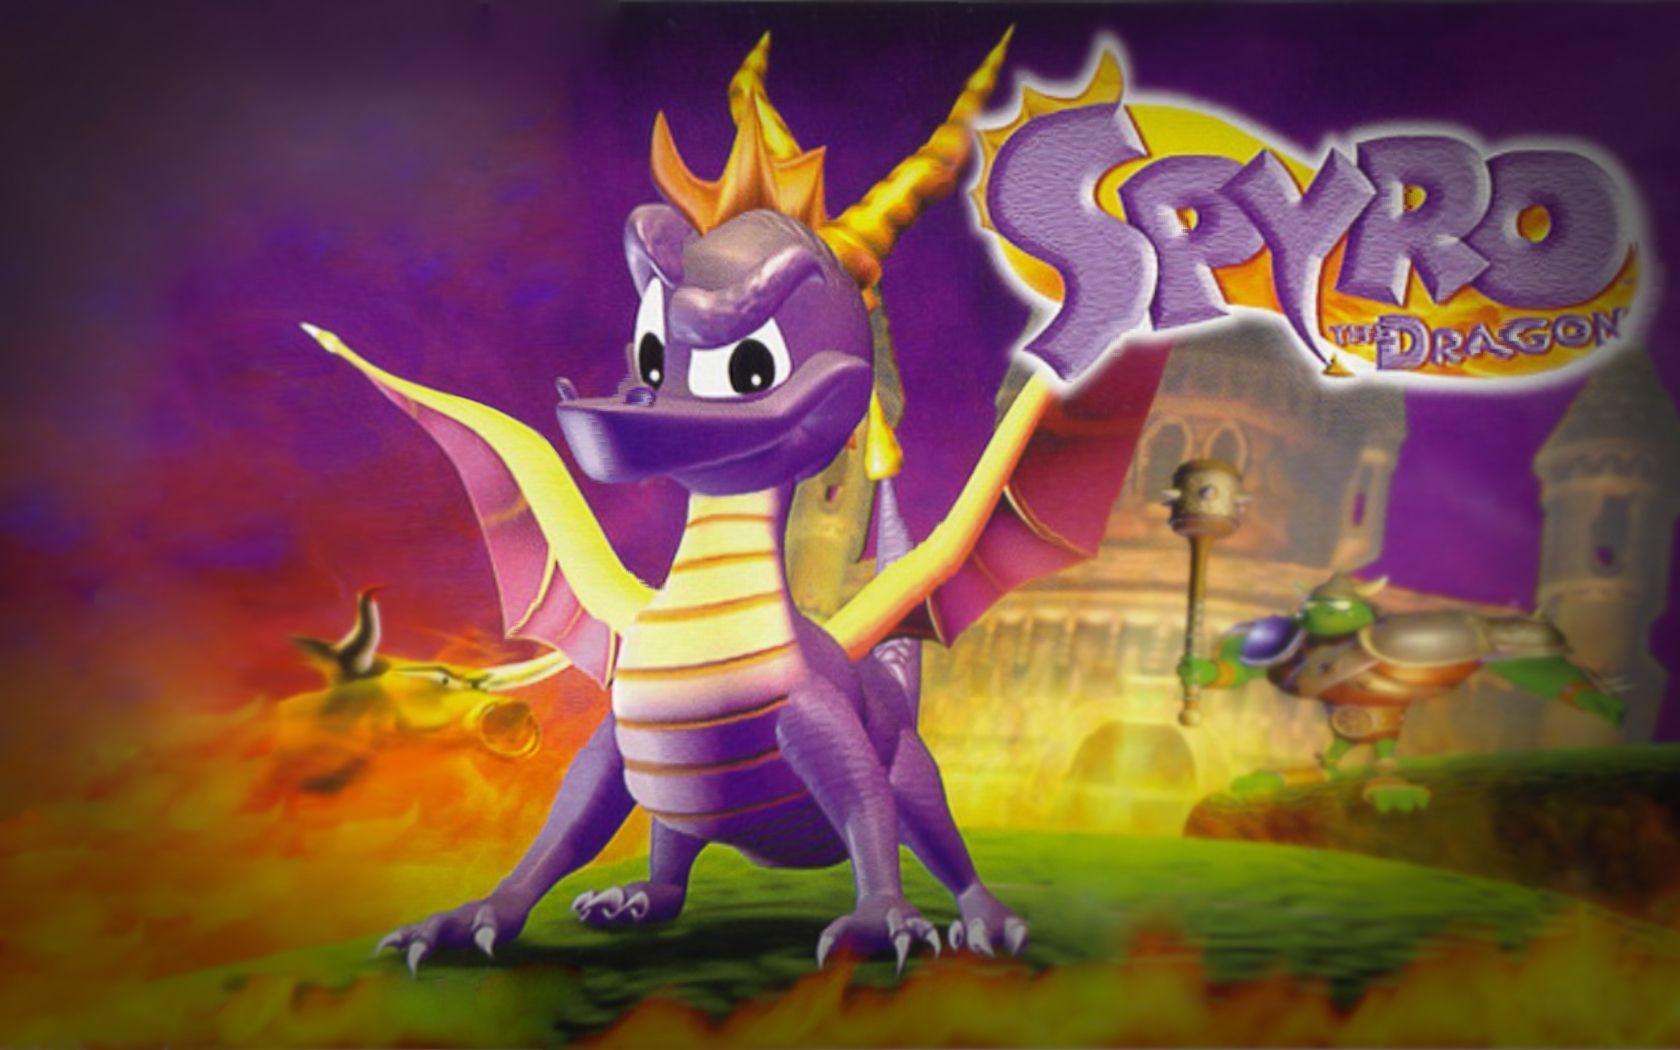 Spyro image Spyro the Dragon Wallpaper HD wallpaper and background